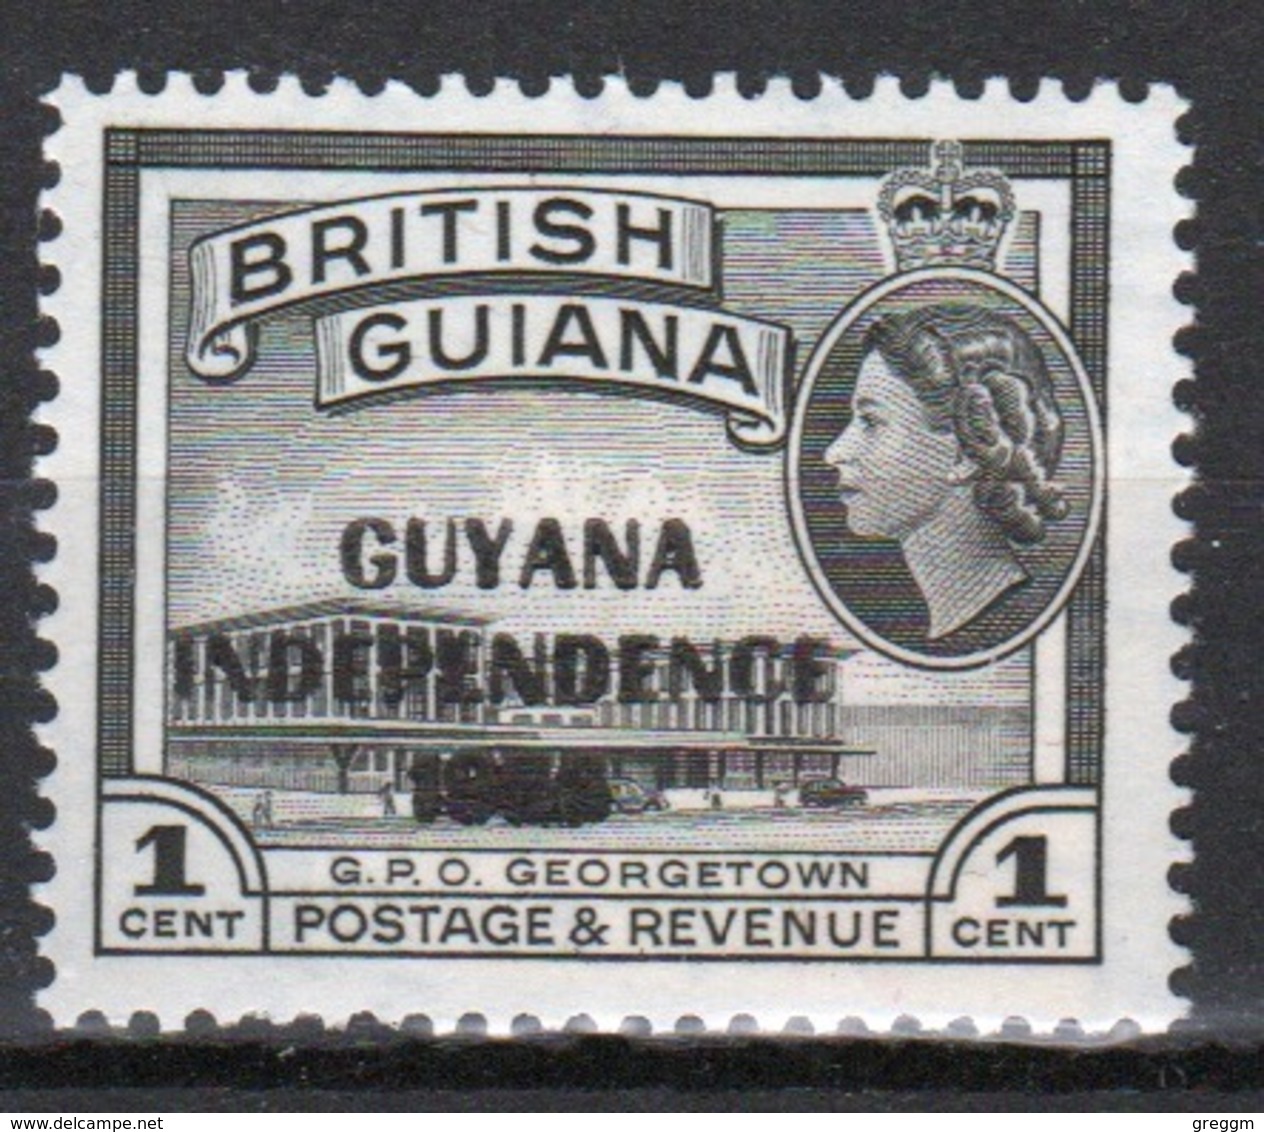 Guyana 1966 Single 1c Stamp From The British Guiana Definitive Series Overprinted For Guyana. - Guyana (1966-...)